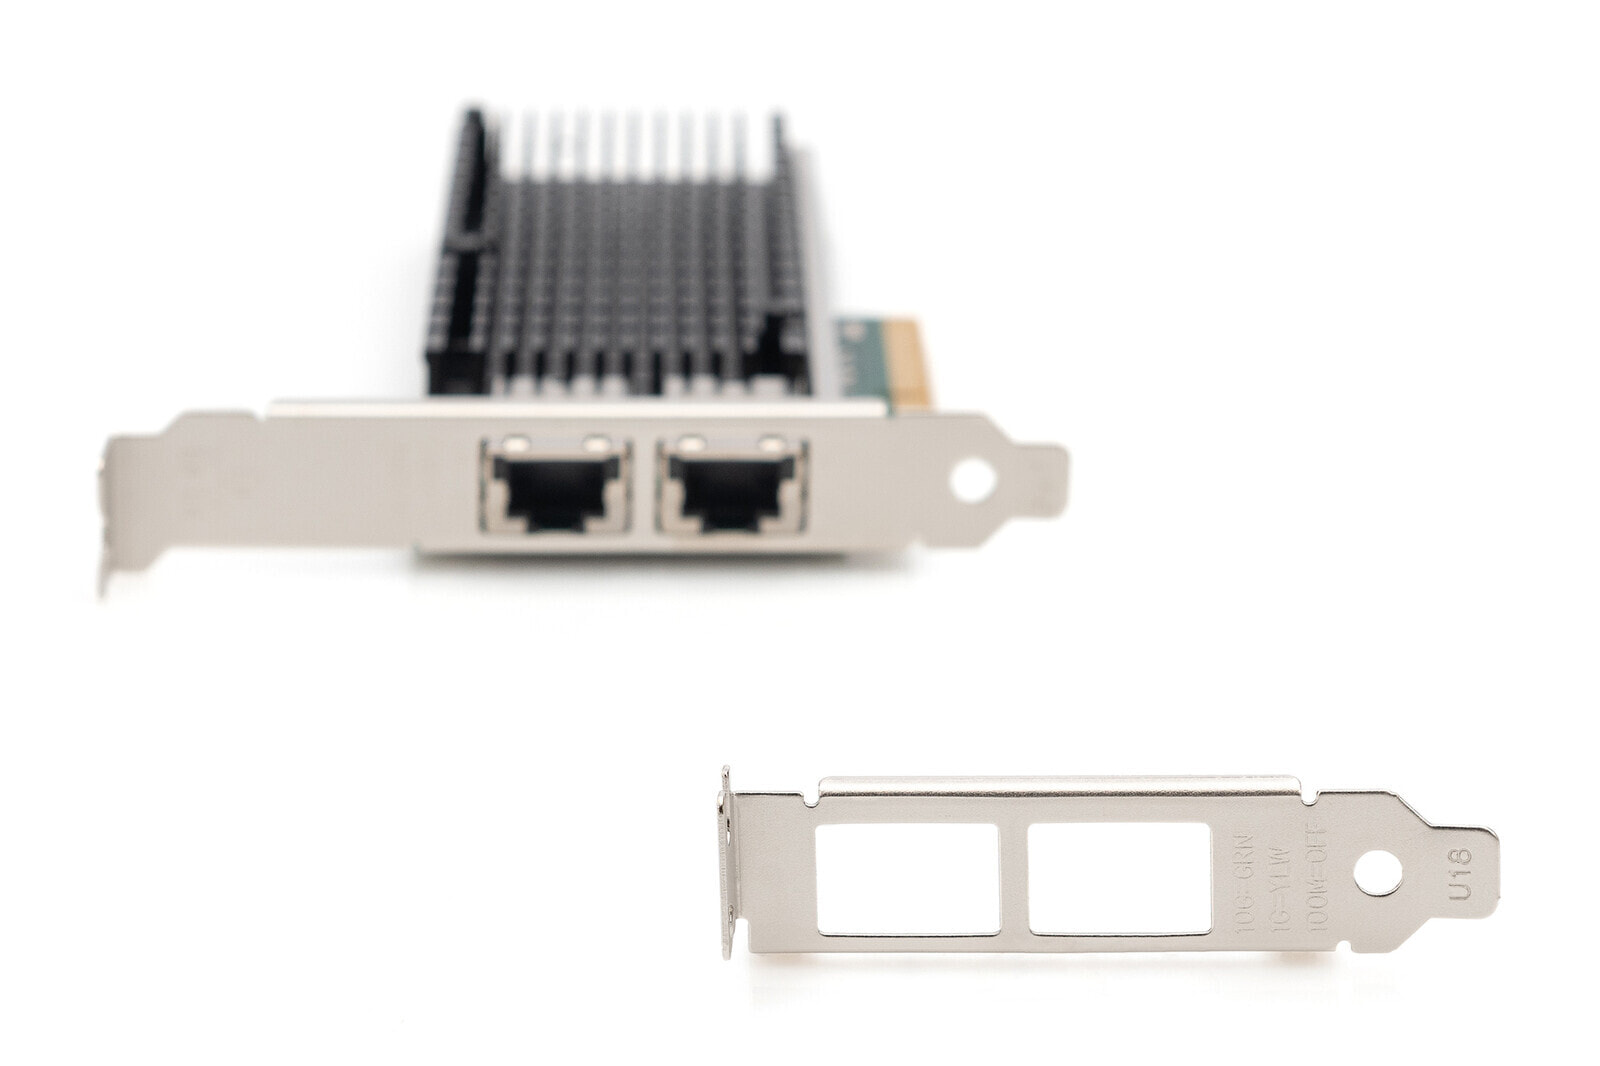 10Gbps Dual Port Ethernet Server adapter